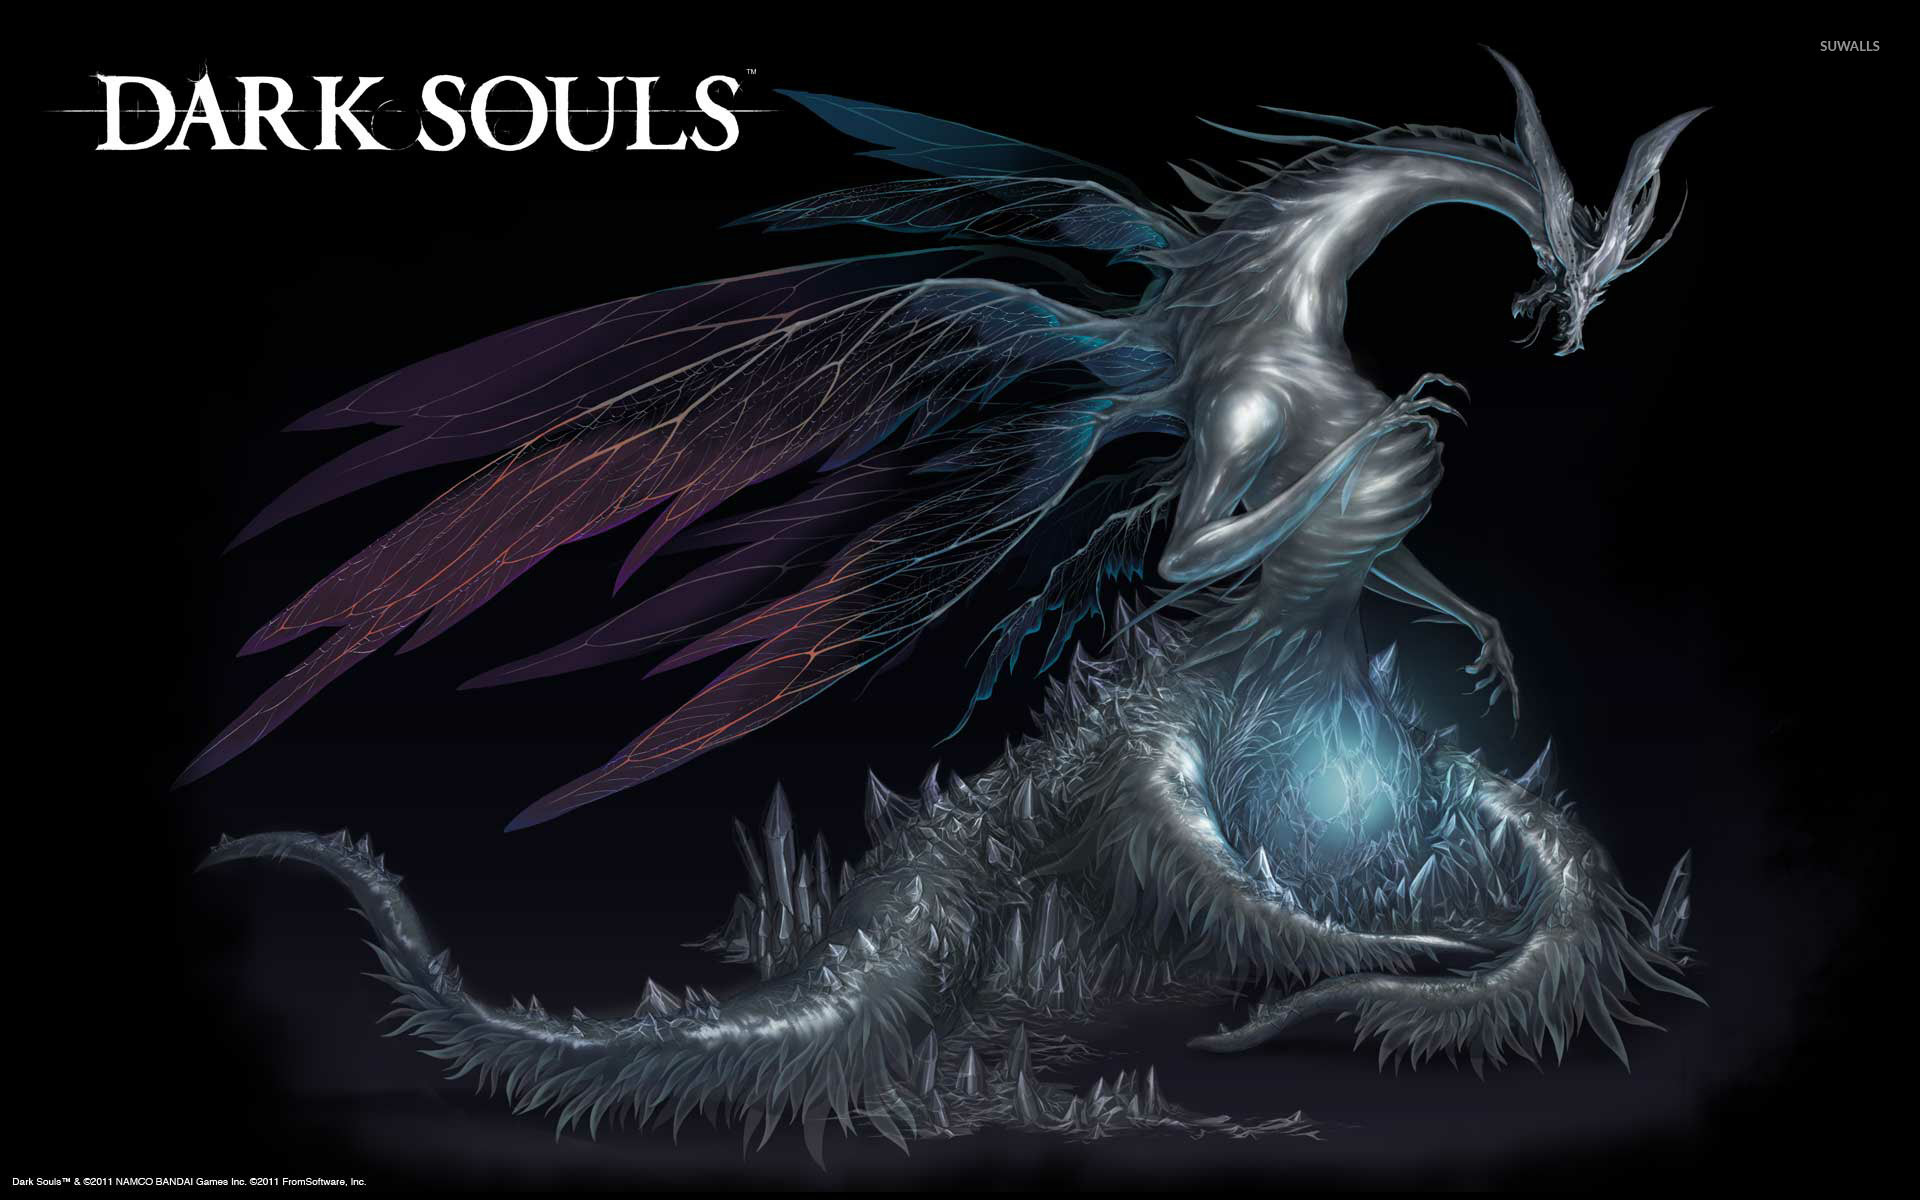 Dark Souls Wallpaper